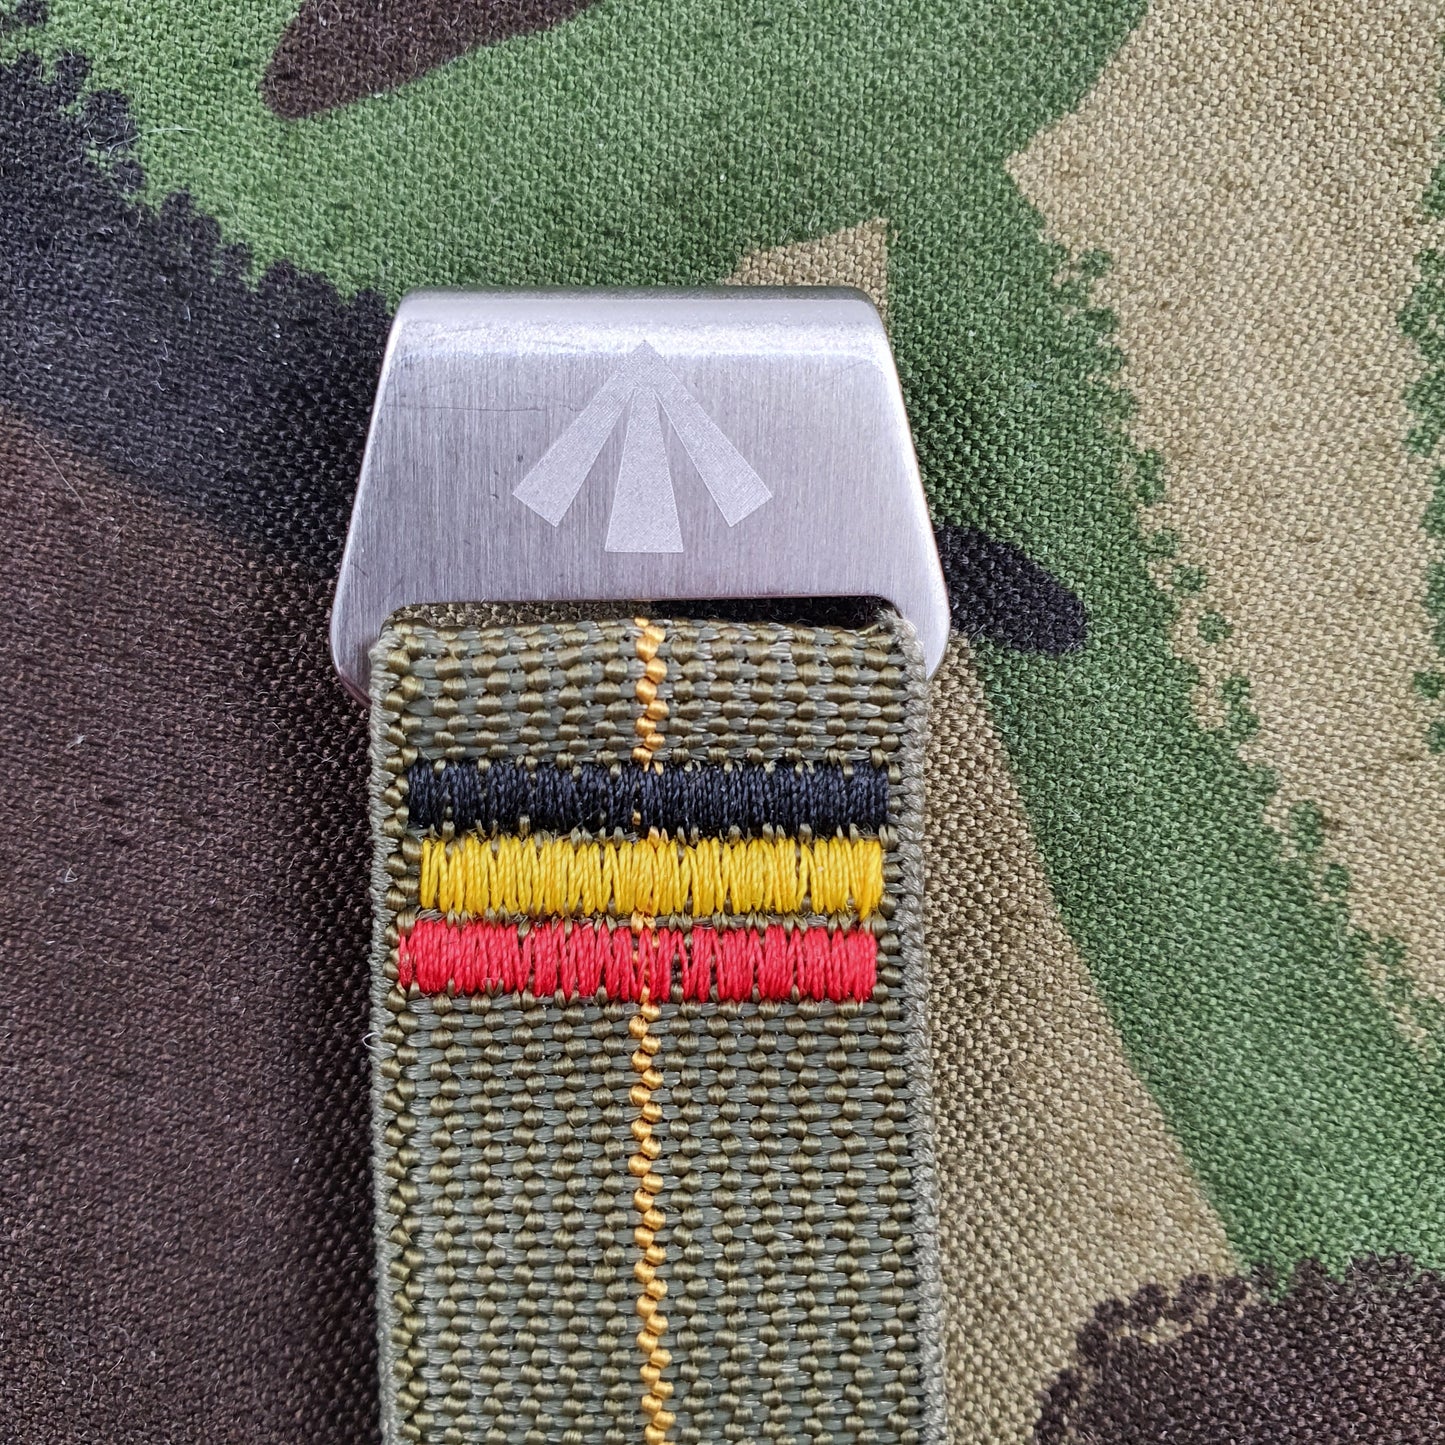 Original NDC strap - with jumbo stitch - NDC Straps